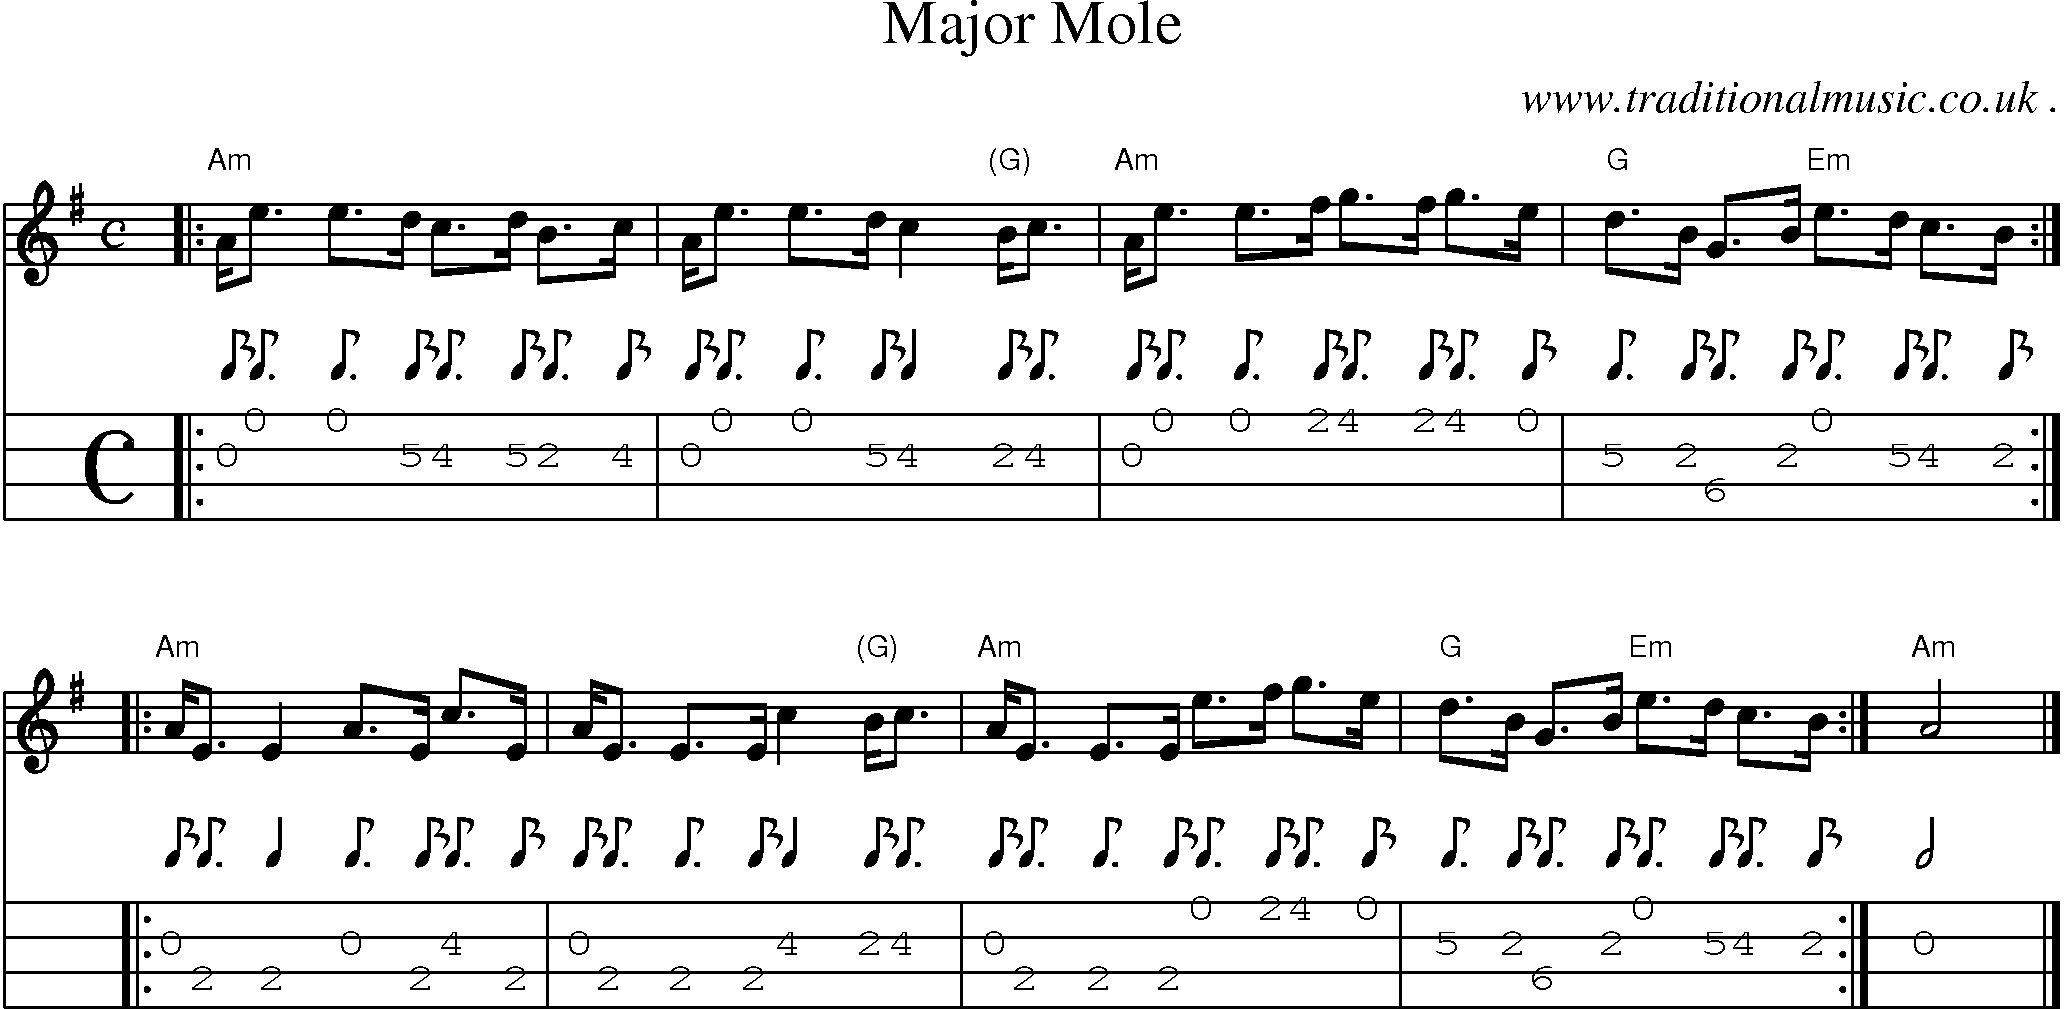 Sheet-music  score, Chords and Mandolin Tabs for Major Mole